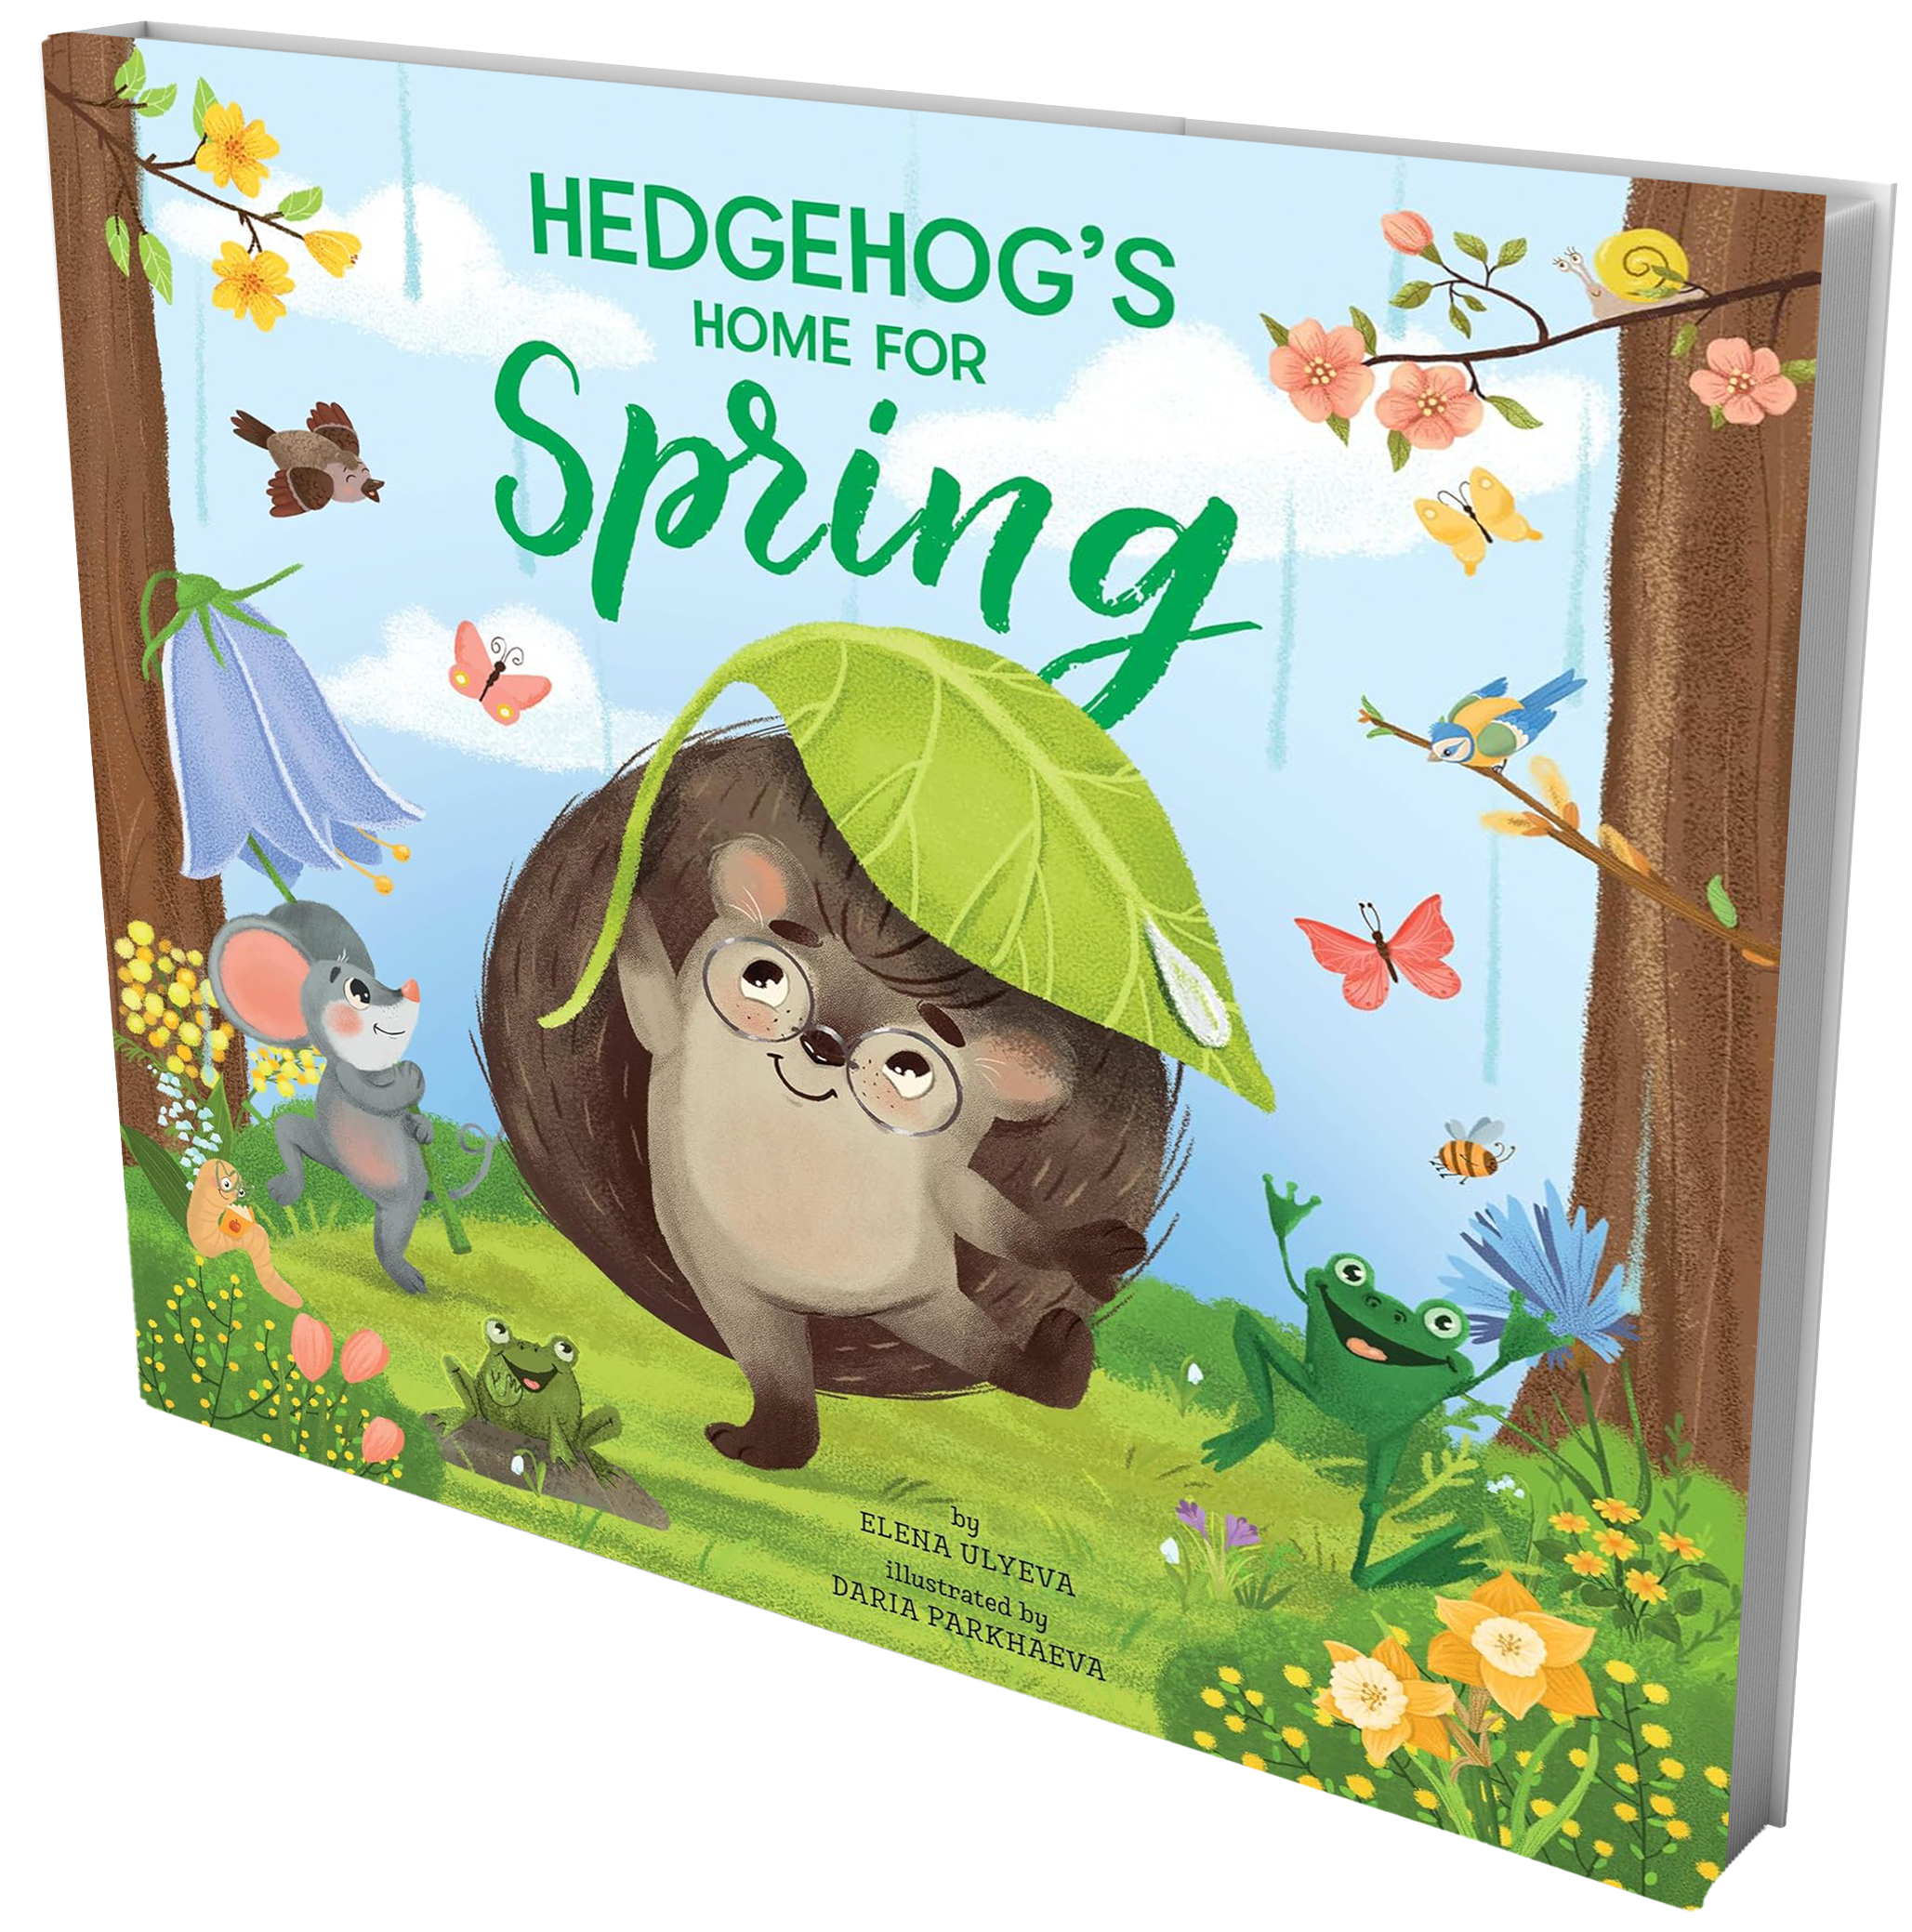 Hedgehog's home for spring